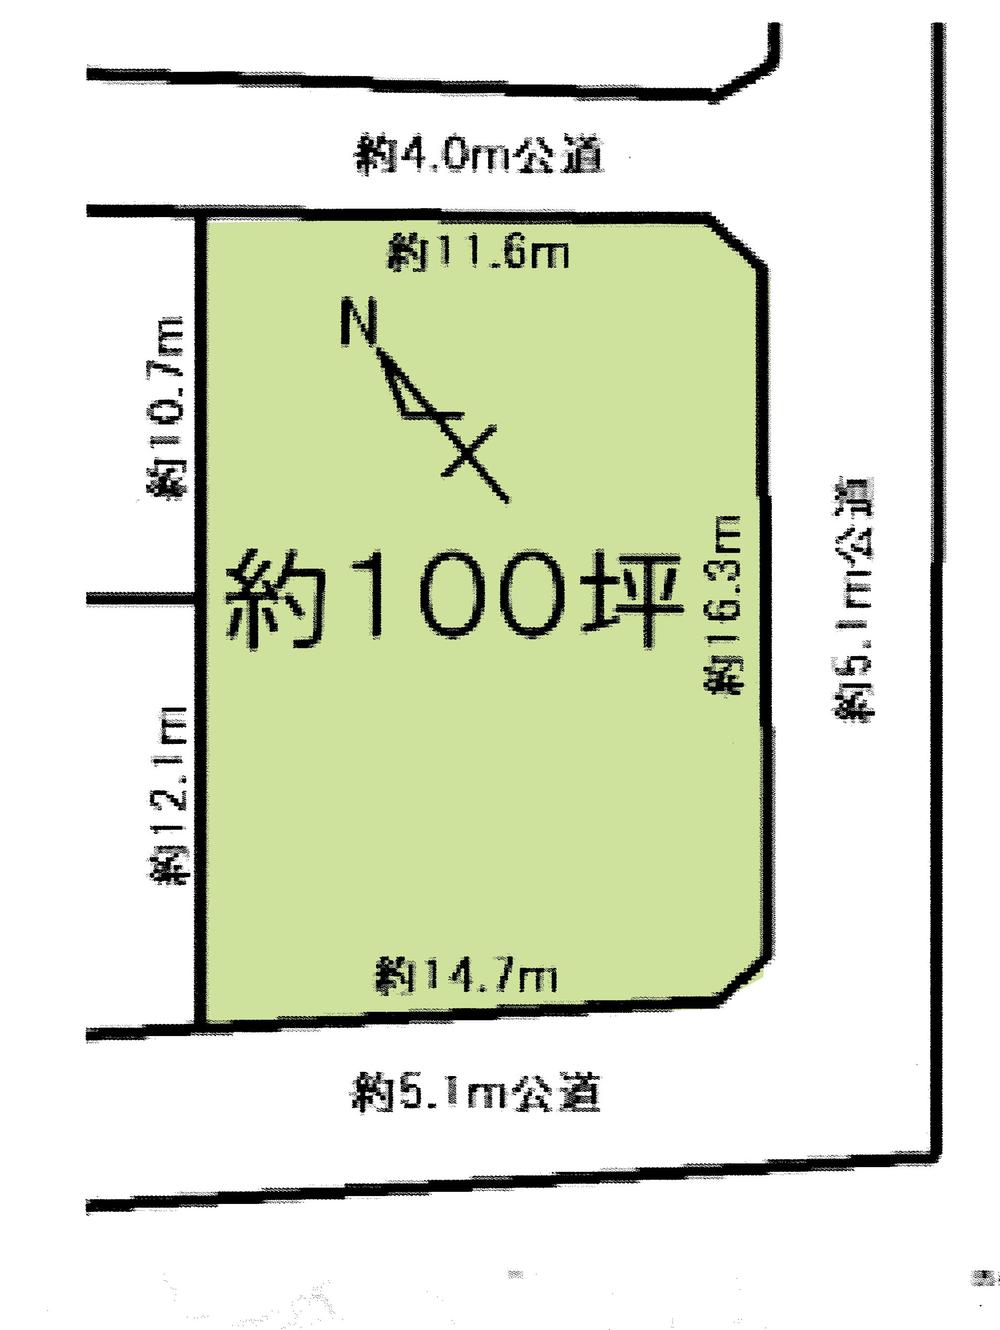 Compartment figure. Land price 5 million yen, Land area 330.57 sq m compartment view